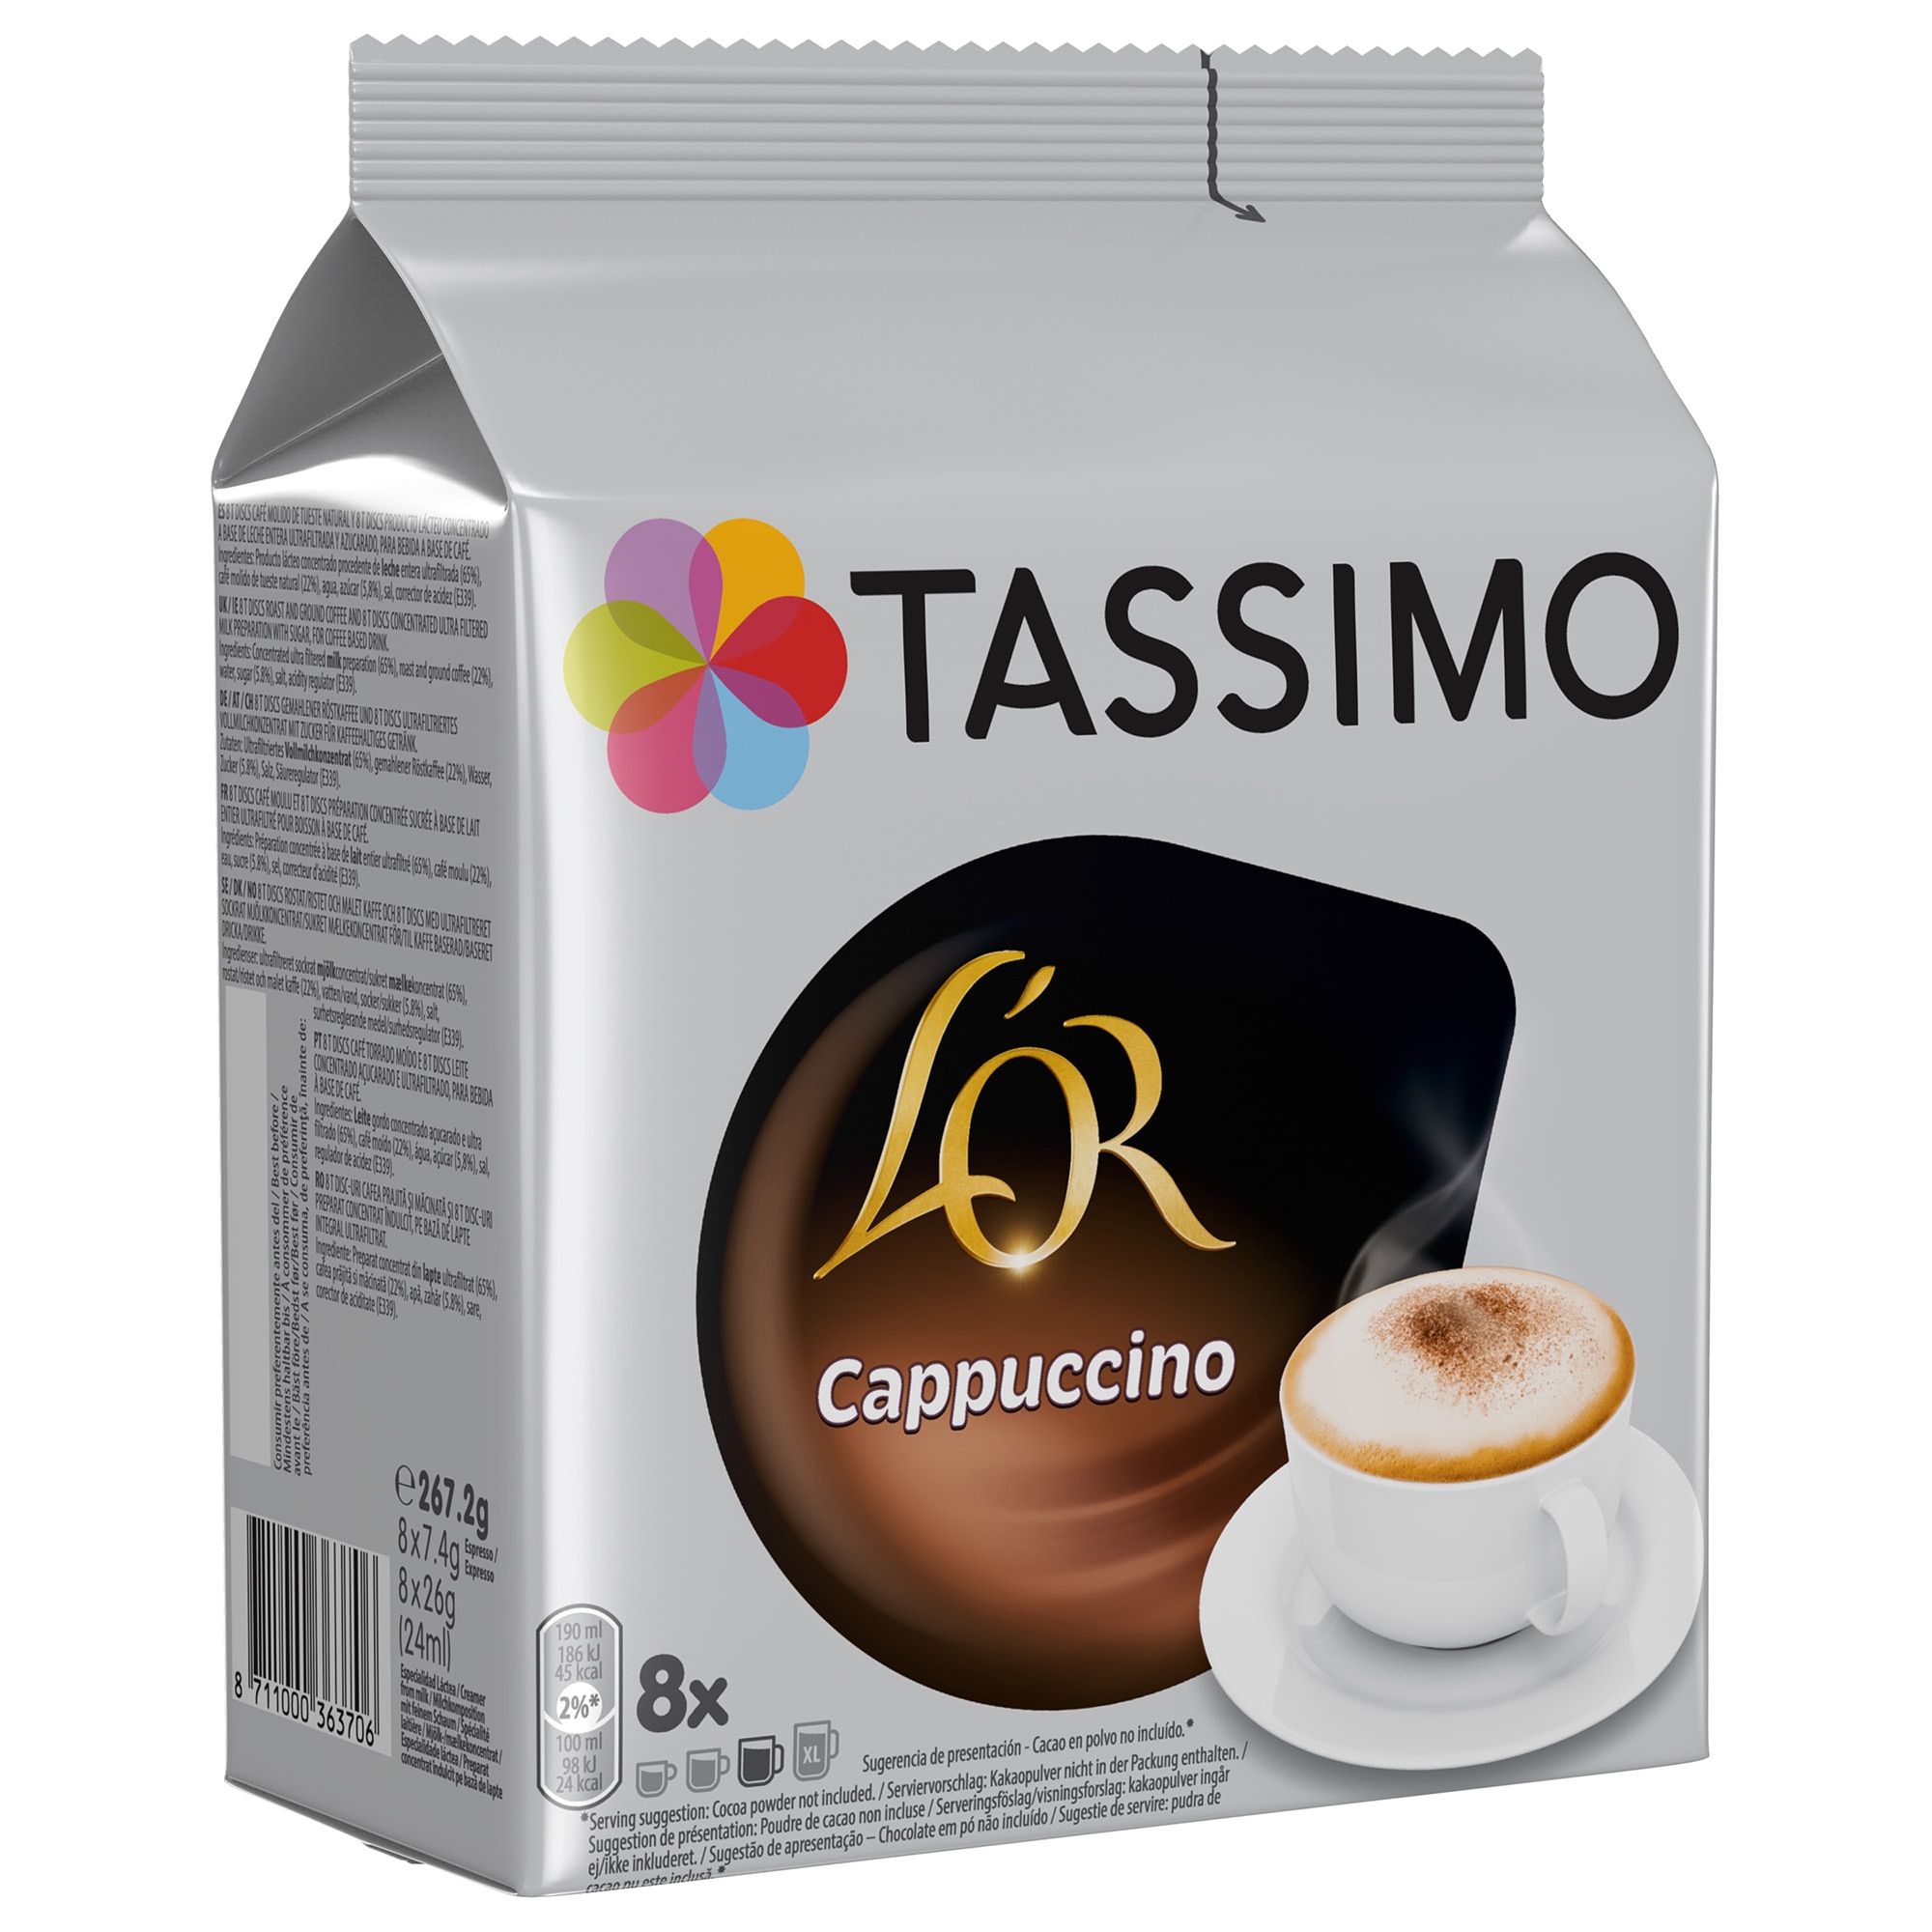 Tassimo Grand Mère Espresso, Coffee, Coffee Capsule, Ground Roasted Coffee,  16 T-Discs